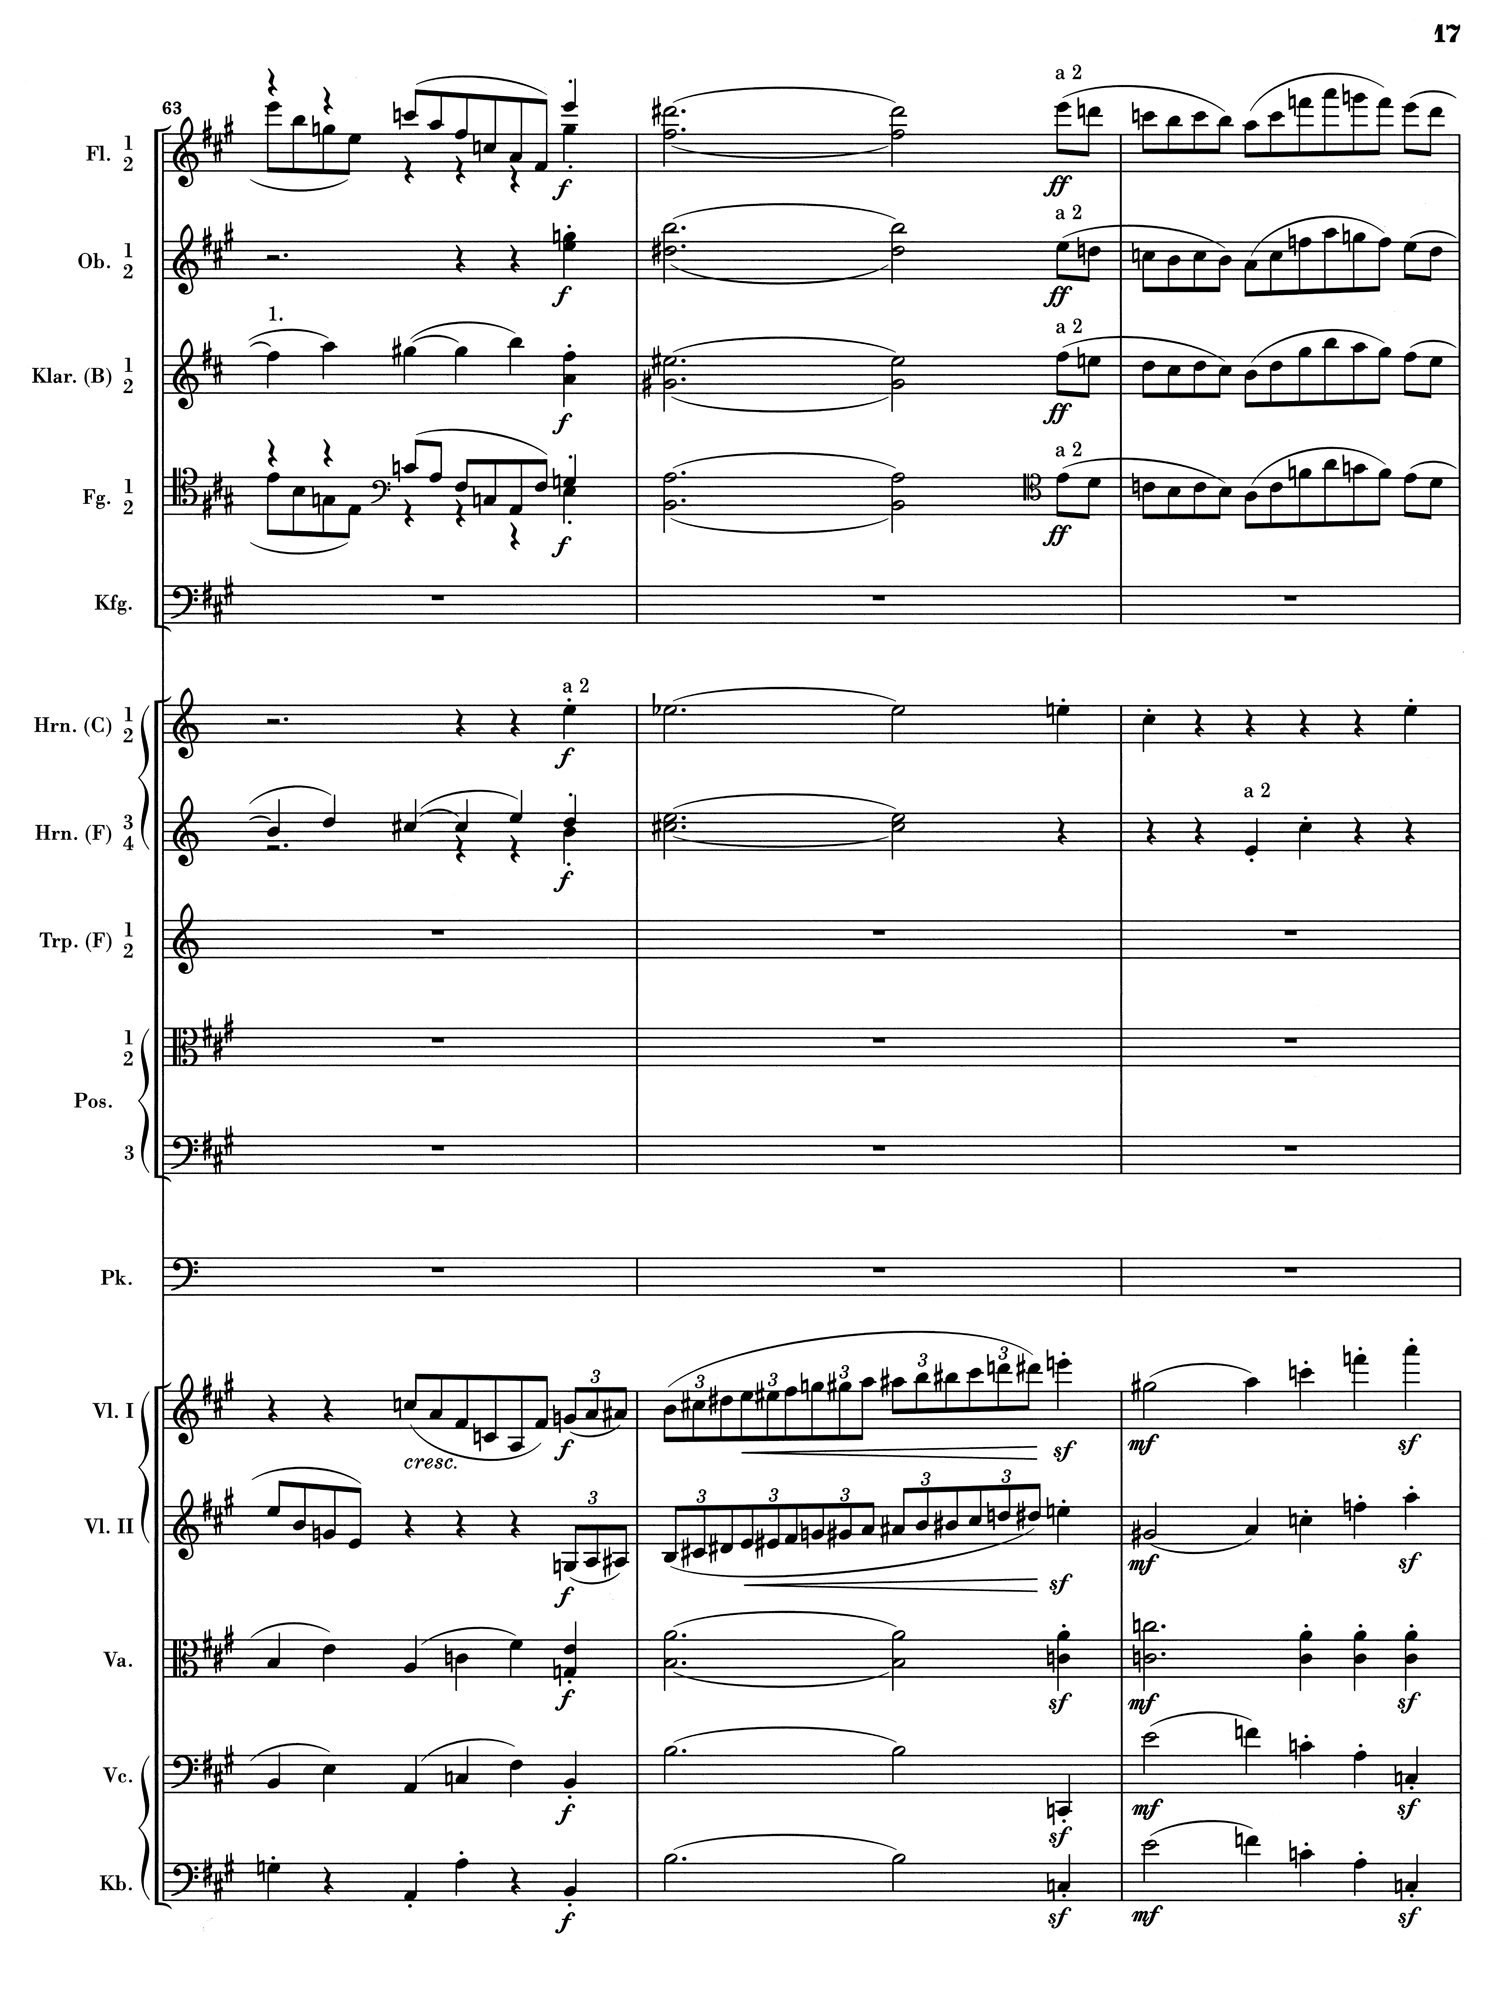 Brahms 3 Score 2.jpg